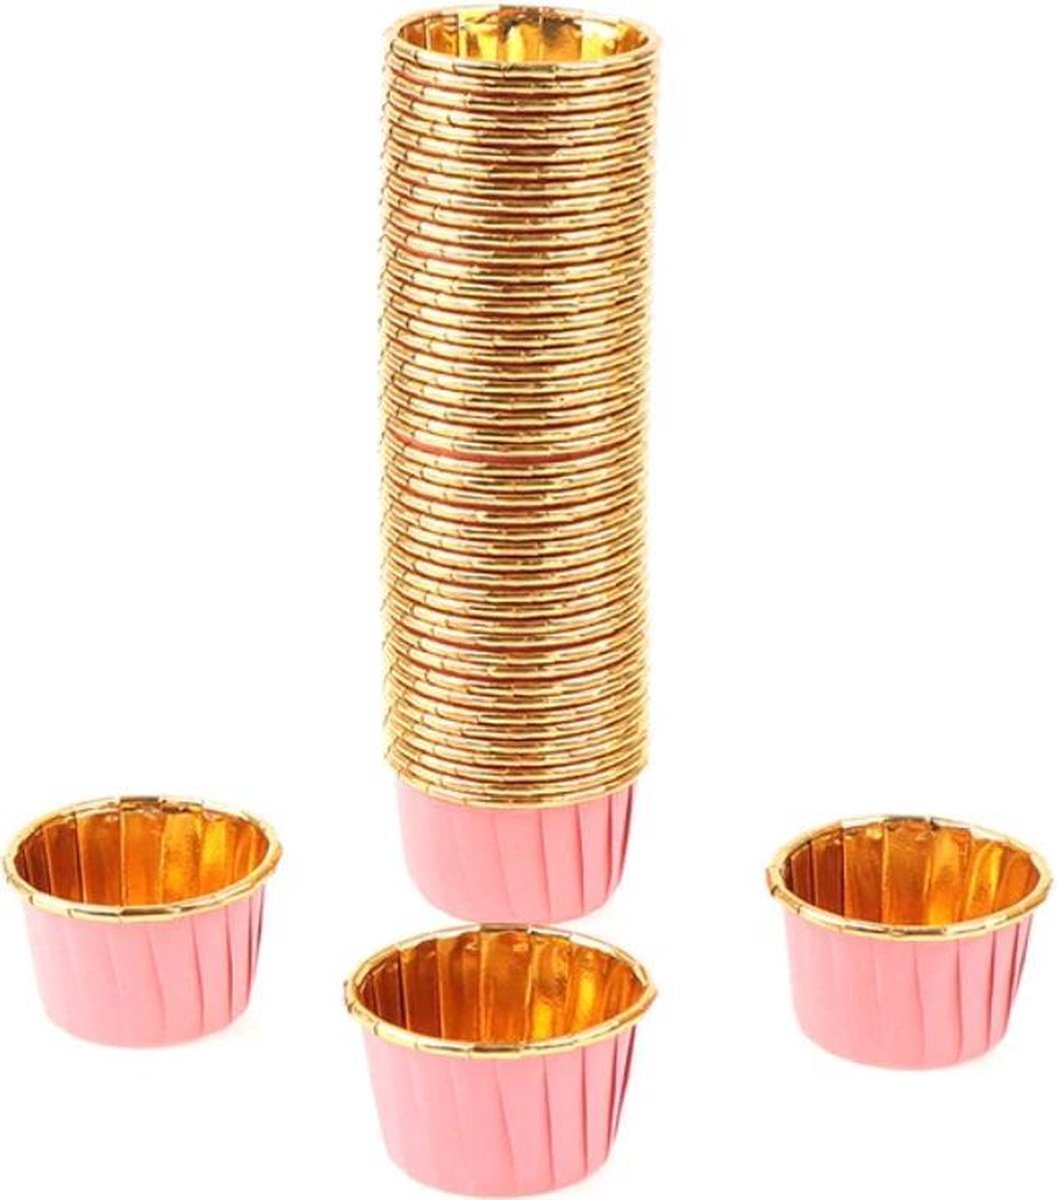 30 Stuks Muffin Cupcake Bakvormen – Luxe Papieren Bak Vormpjes – Roze / Goud